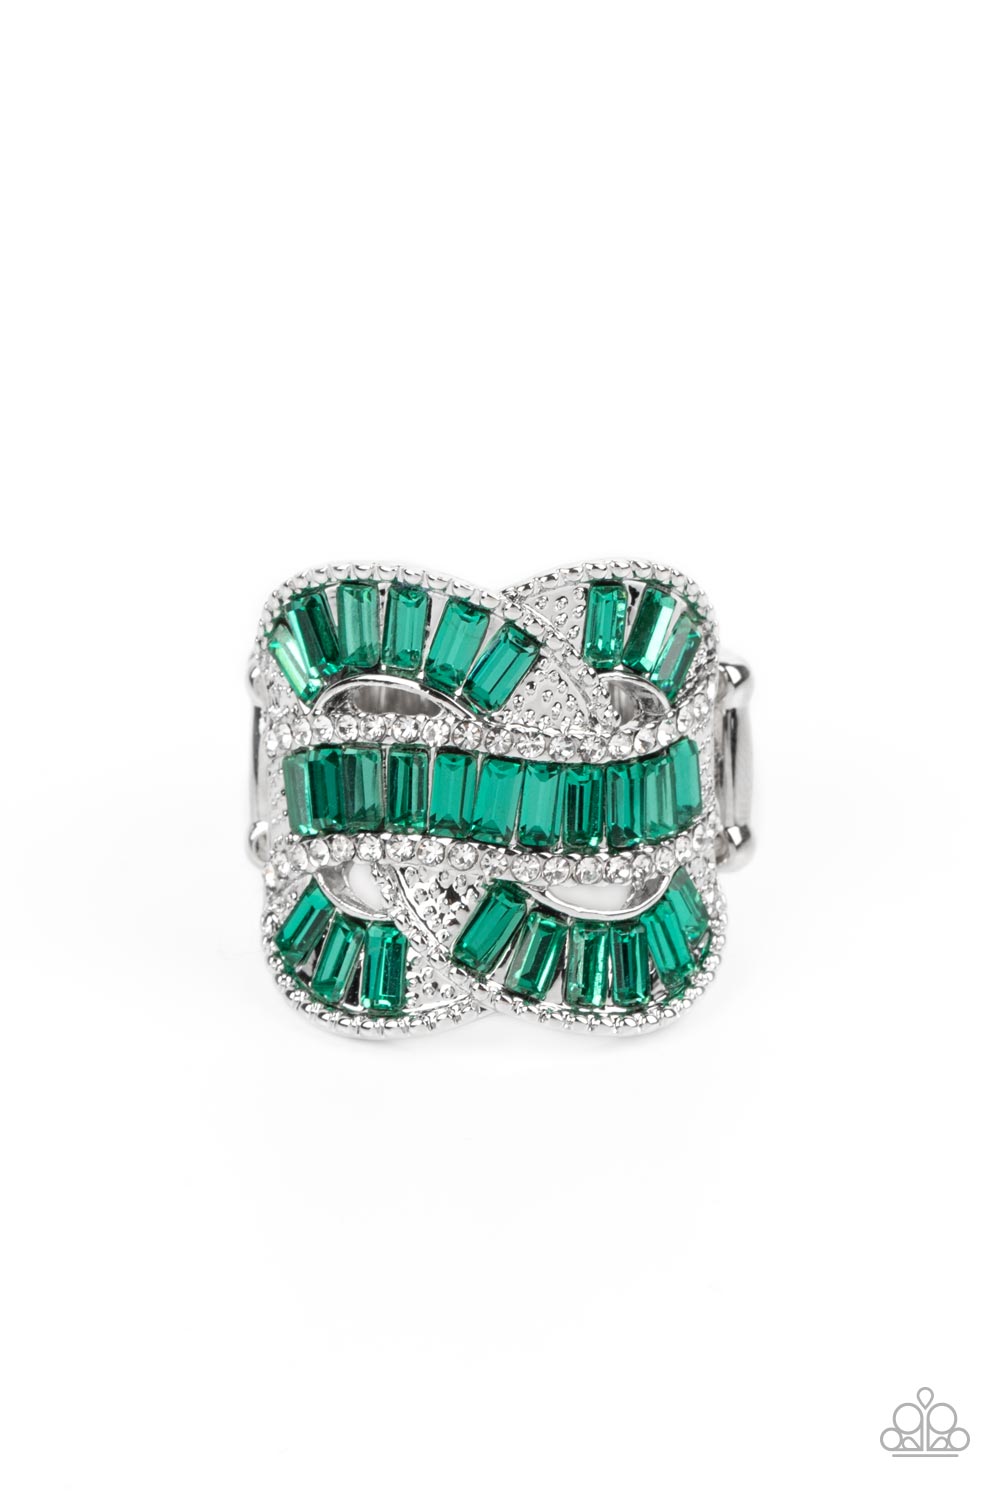 Six-Figure Flex Green Rhinestone Ring - Paparazzi Accessories- lightbox - CarasShop.com - $5 Jewelry by Cara Jewels